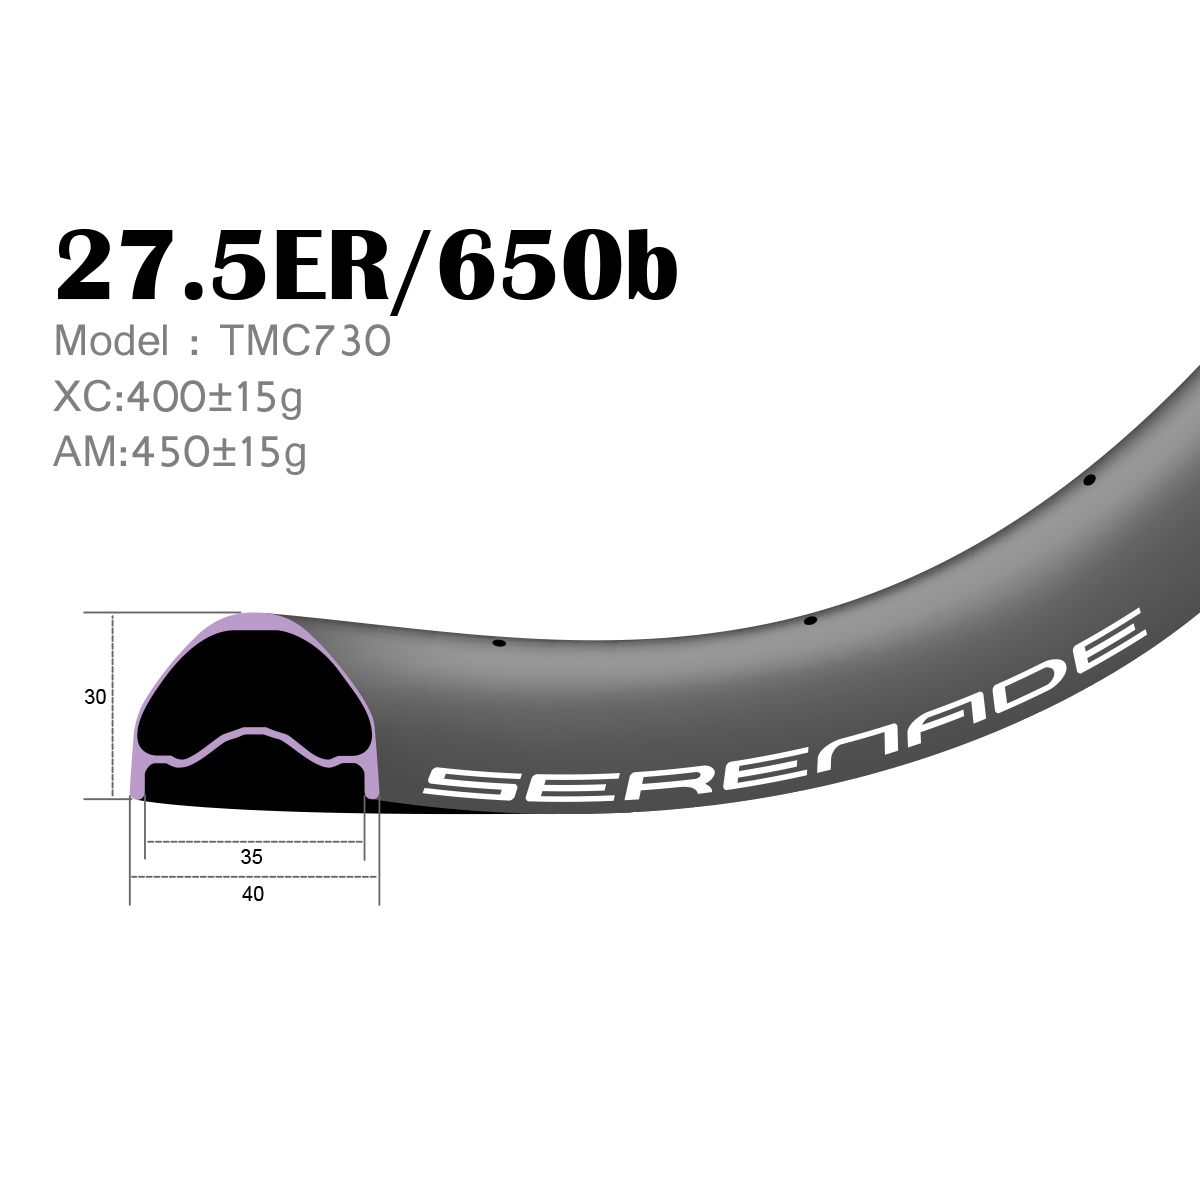 650b Symmetrical carbon mtb rims 40mm width 30mm depth TMC730 650b XC-AM tubeless wide 40mm carbon mtb bike wheels rim serenadebikes